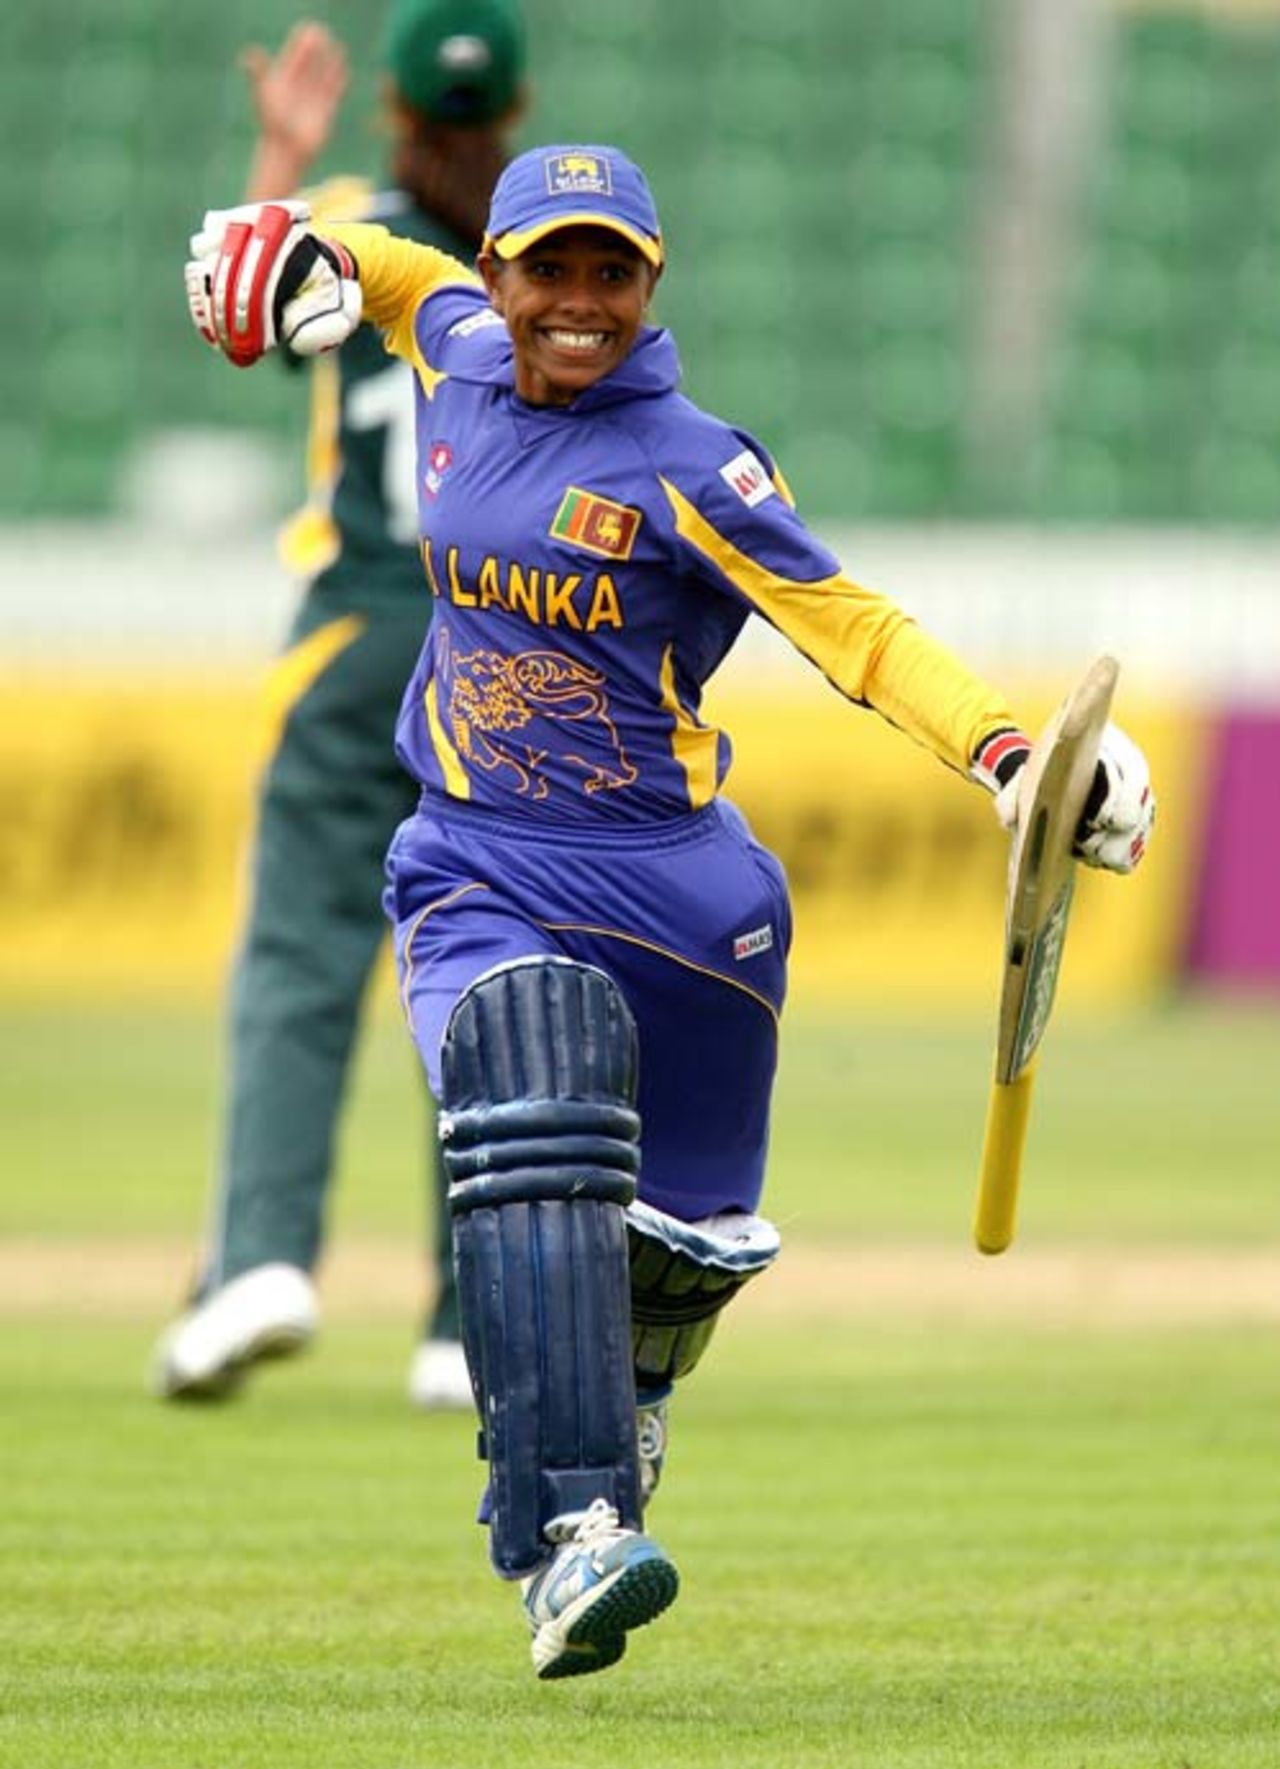 Dilani Manodara is thrilled as Sri Lanka pull off a win, Pakistan v Sri Lanka, ICC Women's World Twenty20, Taunton, June 12, 2009